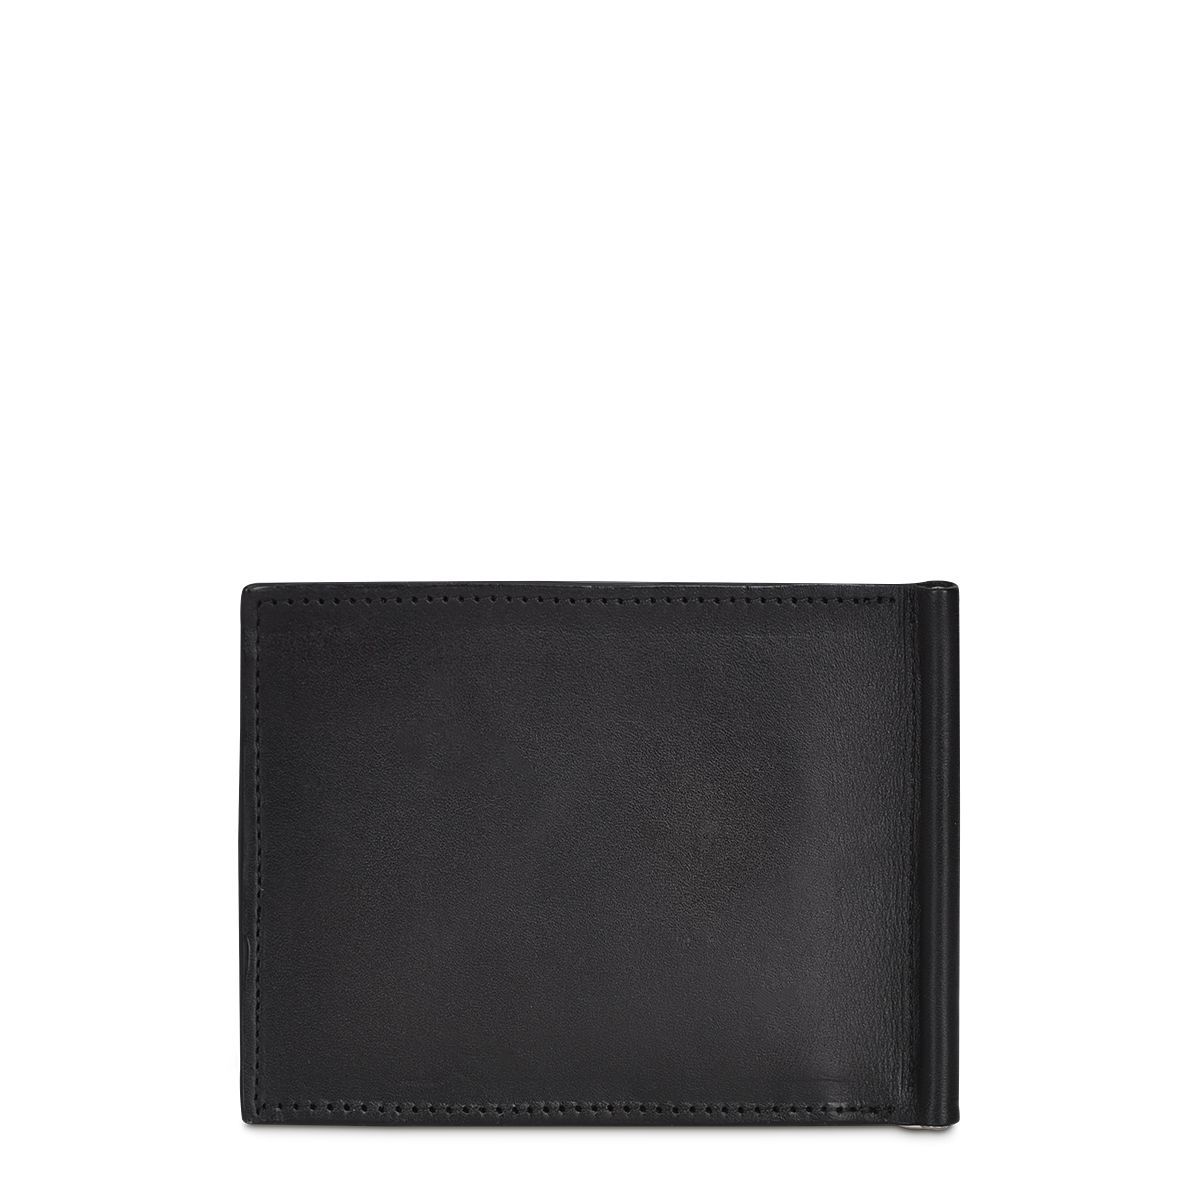 B3043FL - Cuadra black casual fashion leather bi fold wallet for men-Kuet.us